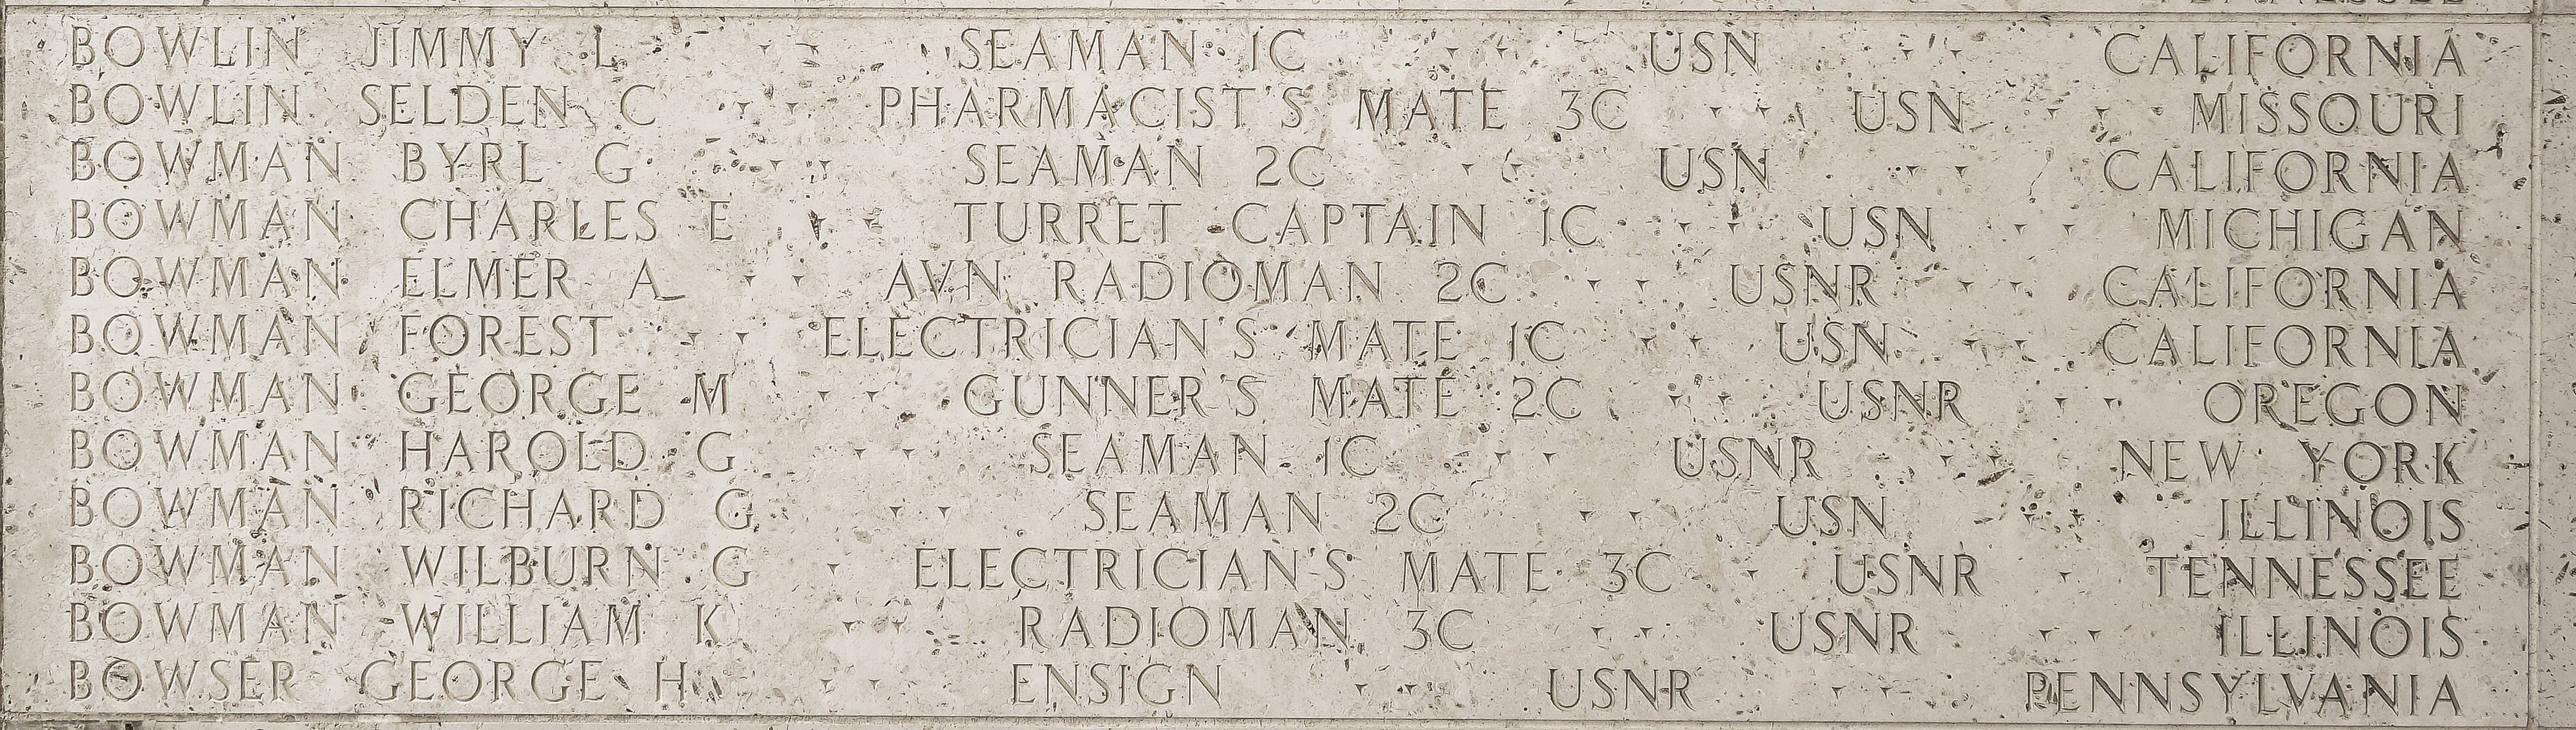 Wilburn G. Bowman, Electrician's Mate Third Class